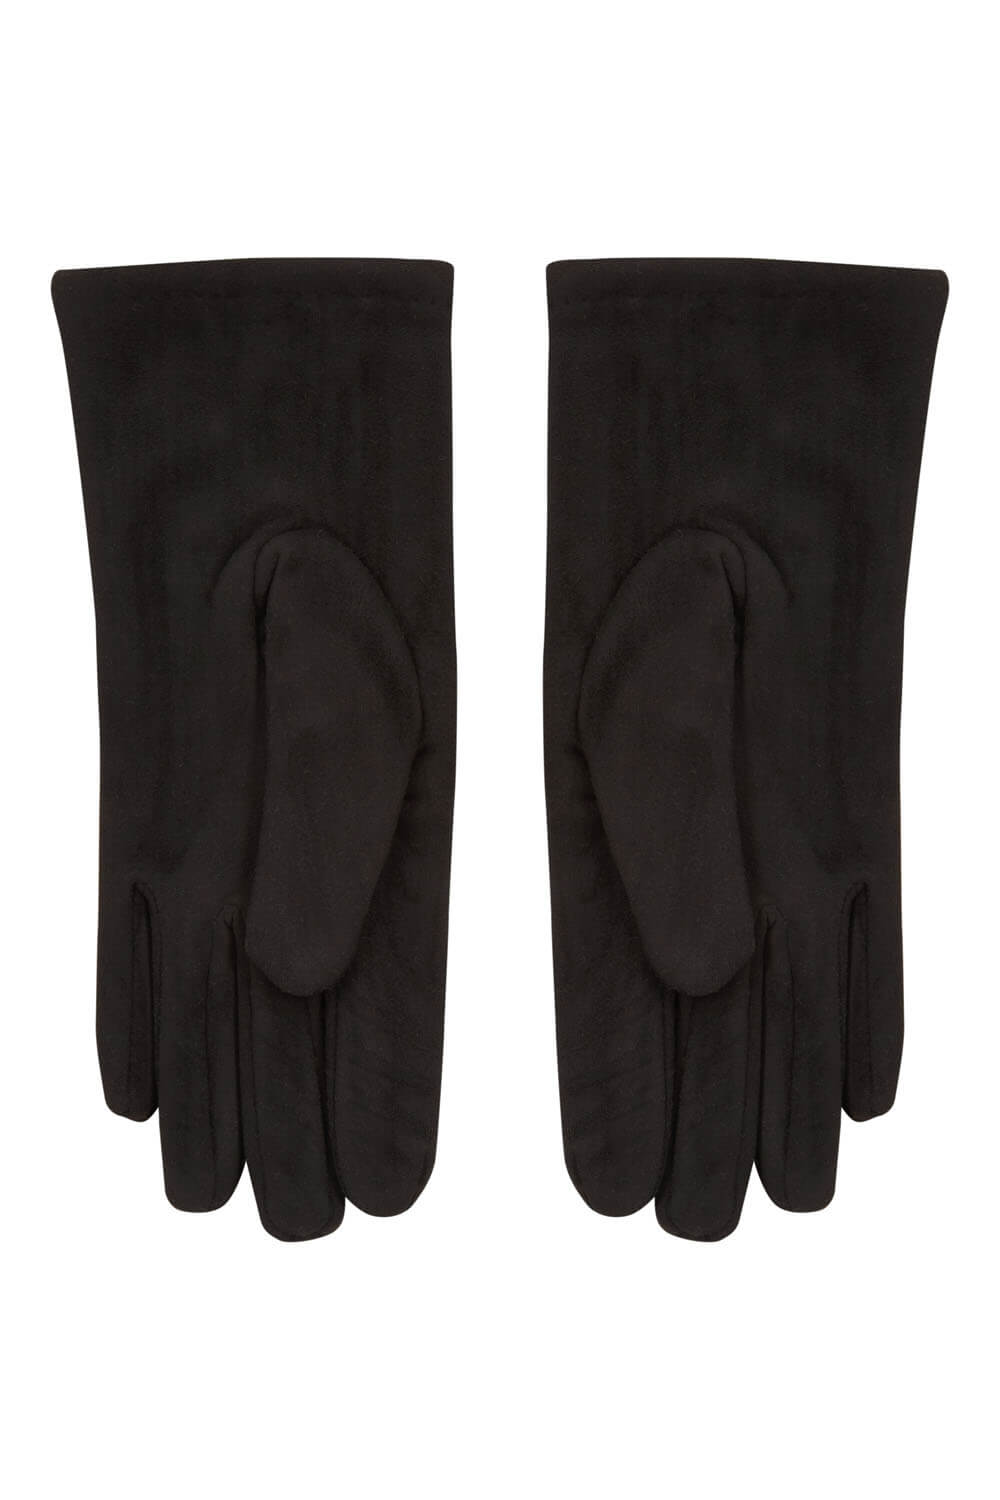 Black Suedette Diamante Gloves, Image 3 of 4